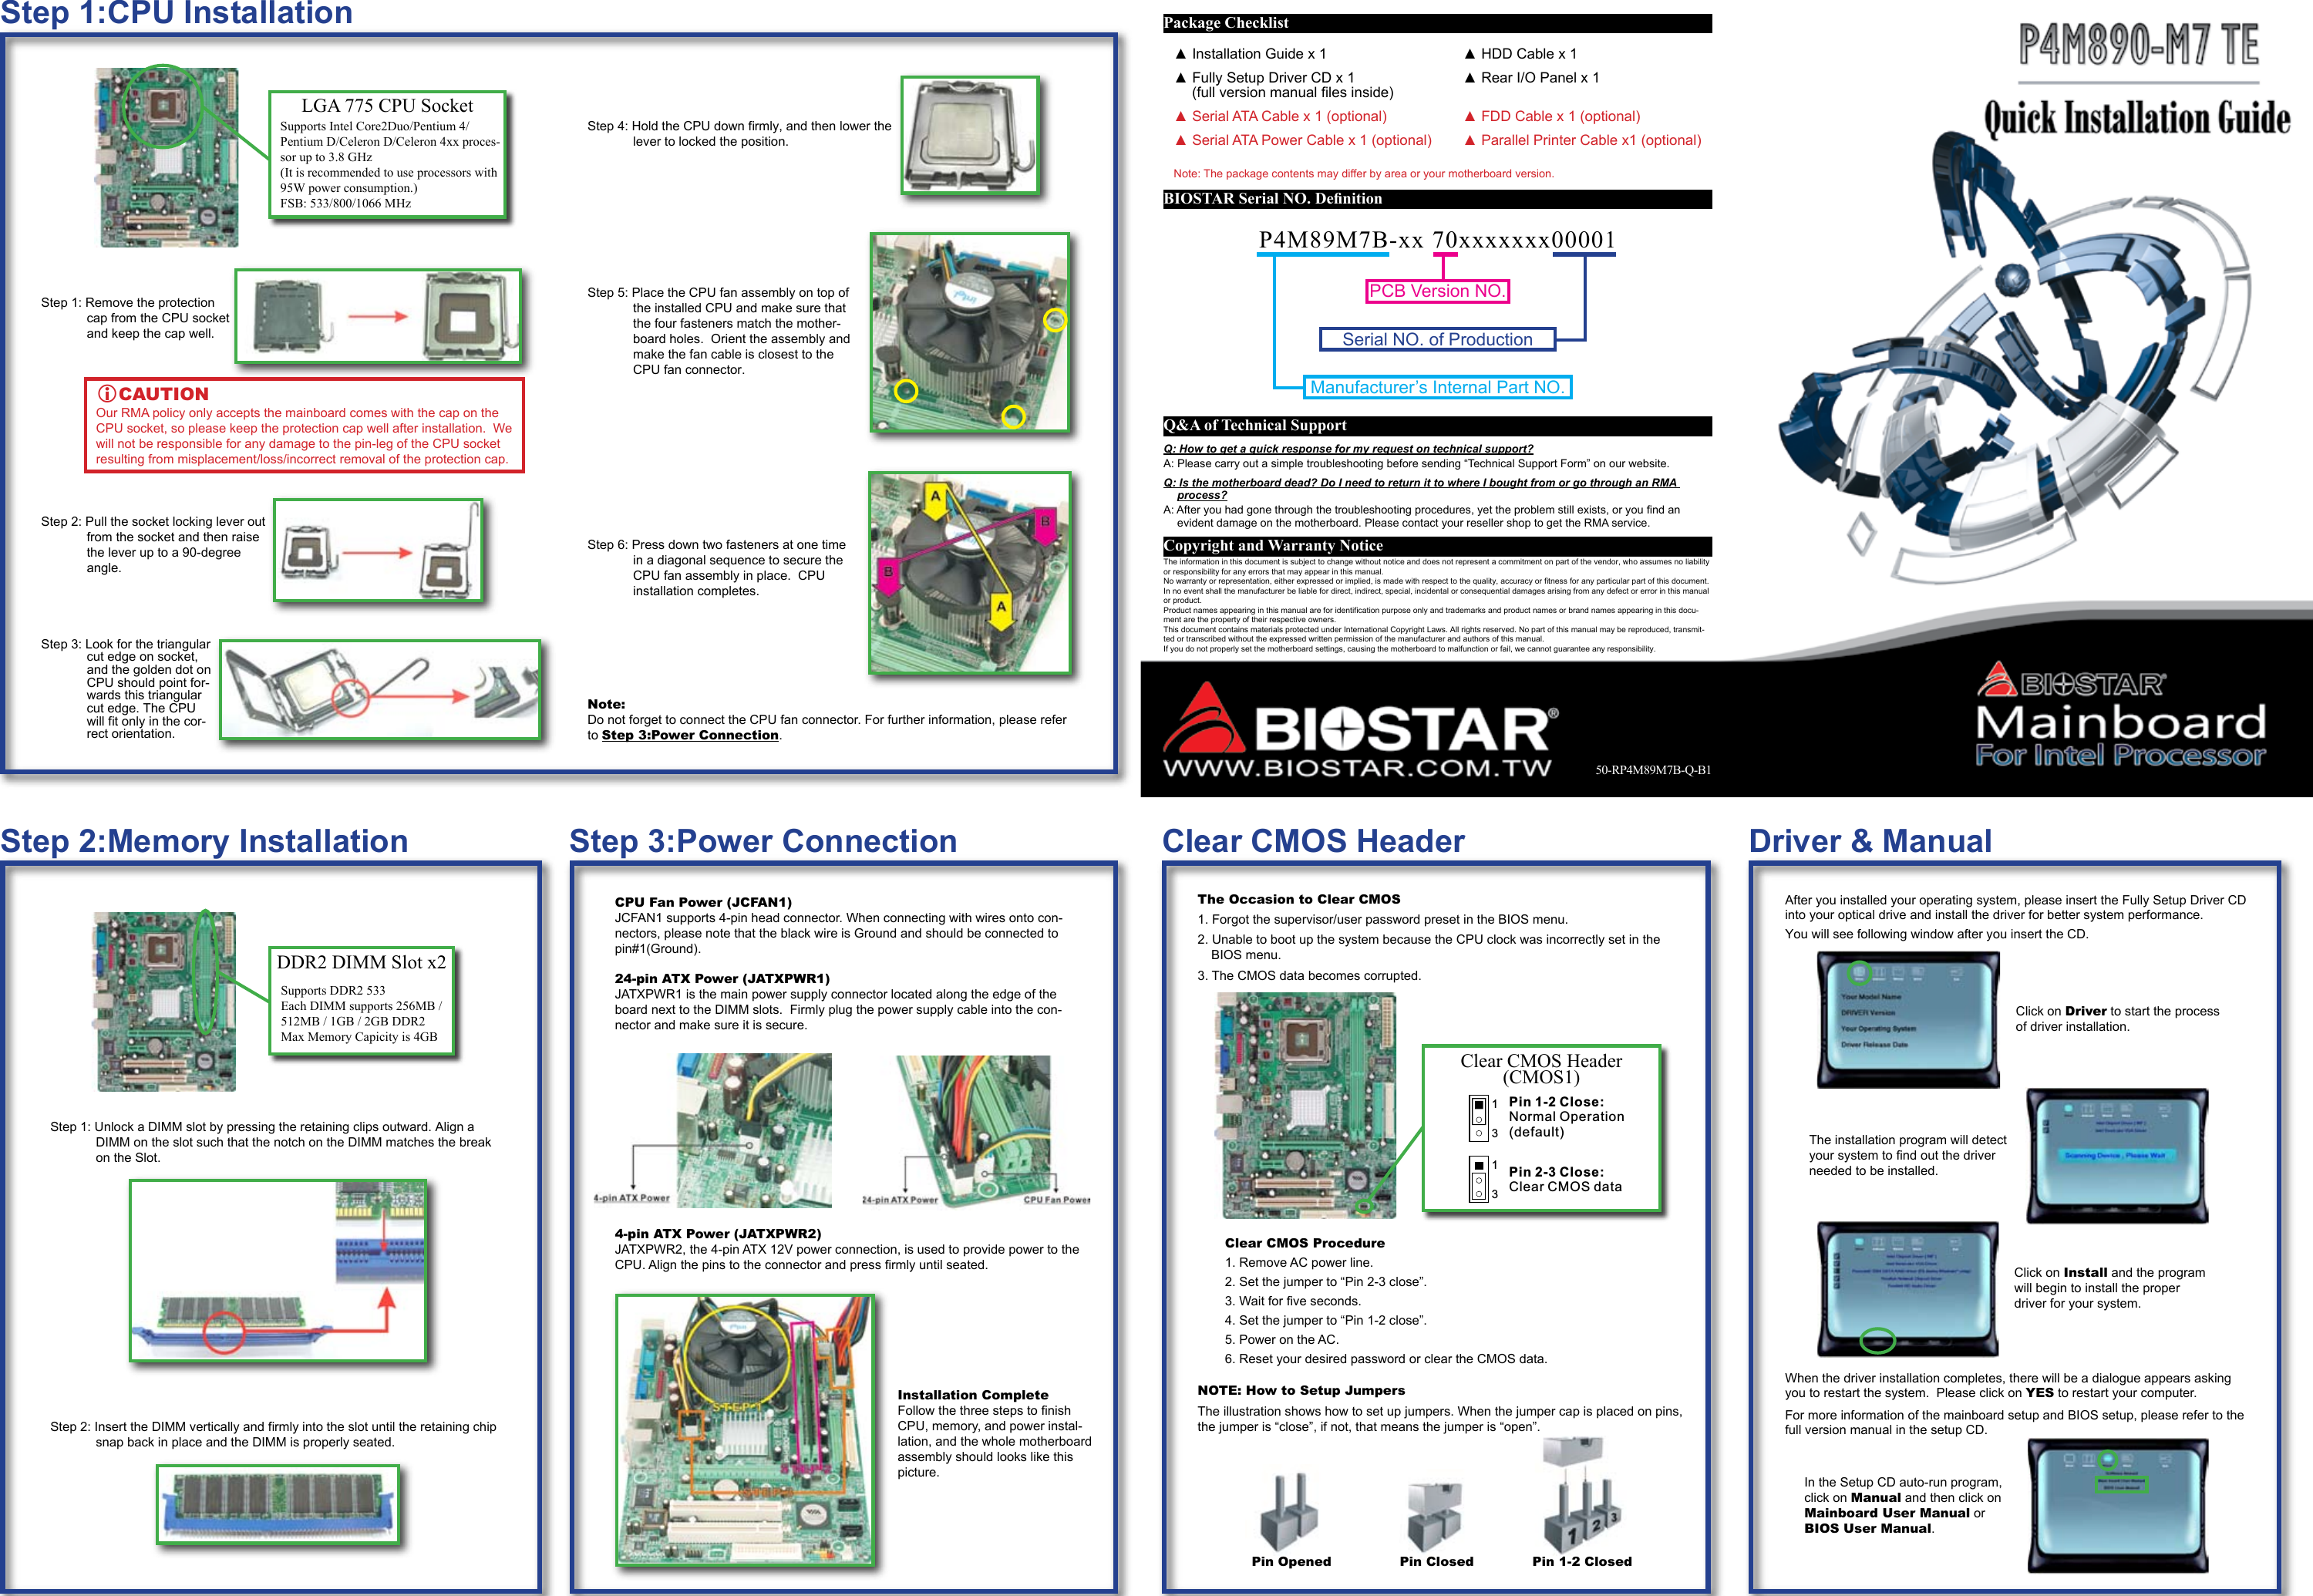 Page 2 of 2 - Biostar Biostar-P4M890-M7-Te-Quick-Start-Guide